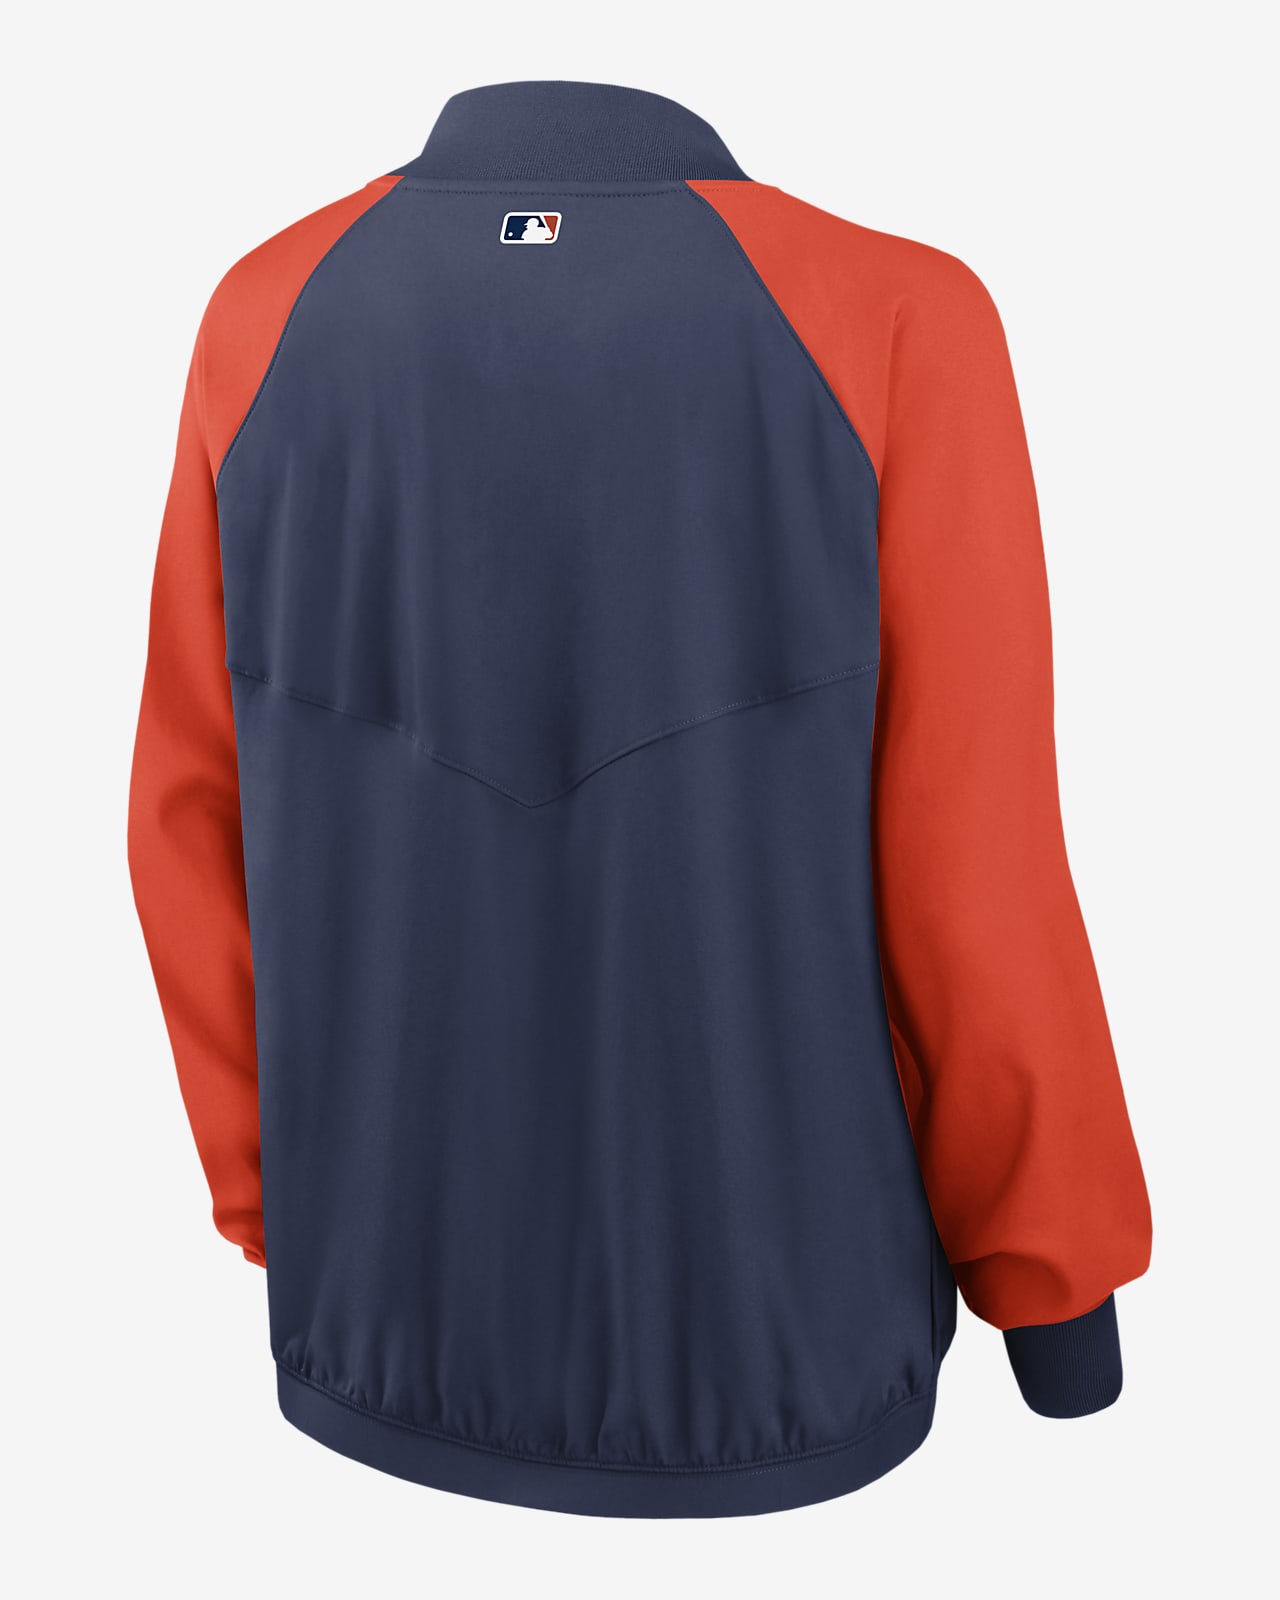 Nike Dri-FIT Team (MLB Houston Astros) Women's Full-Zip Jacket.